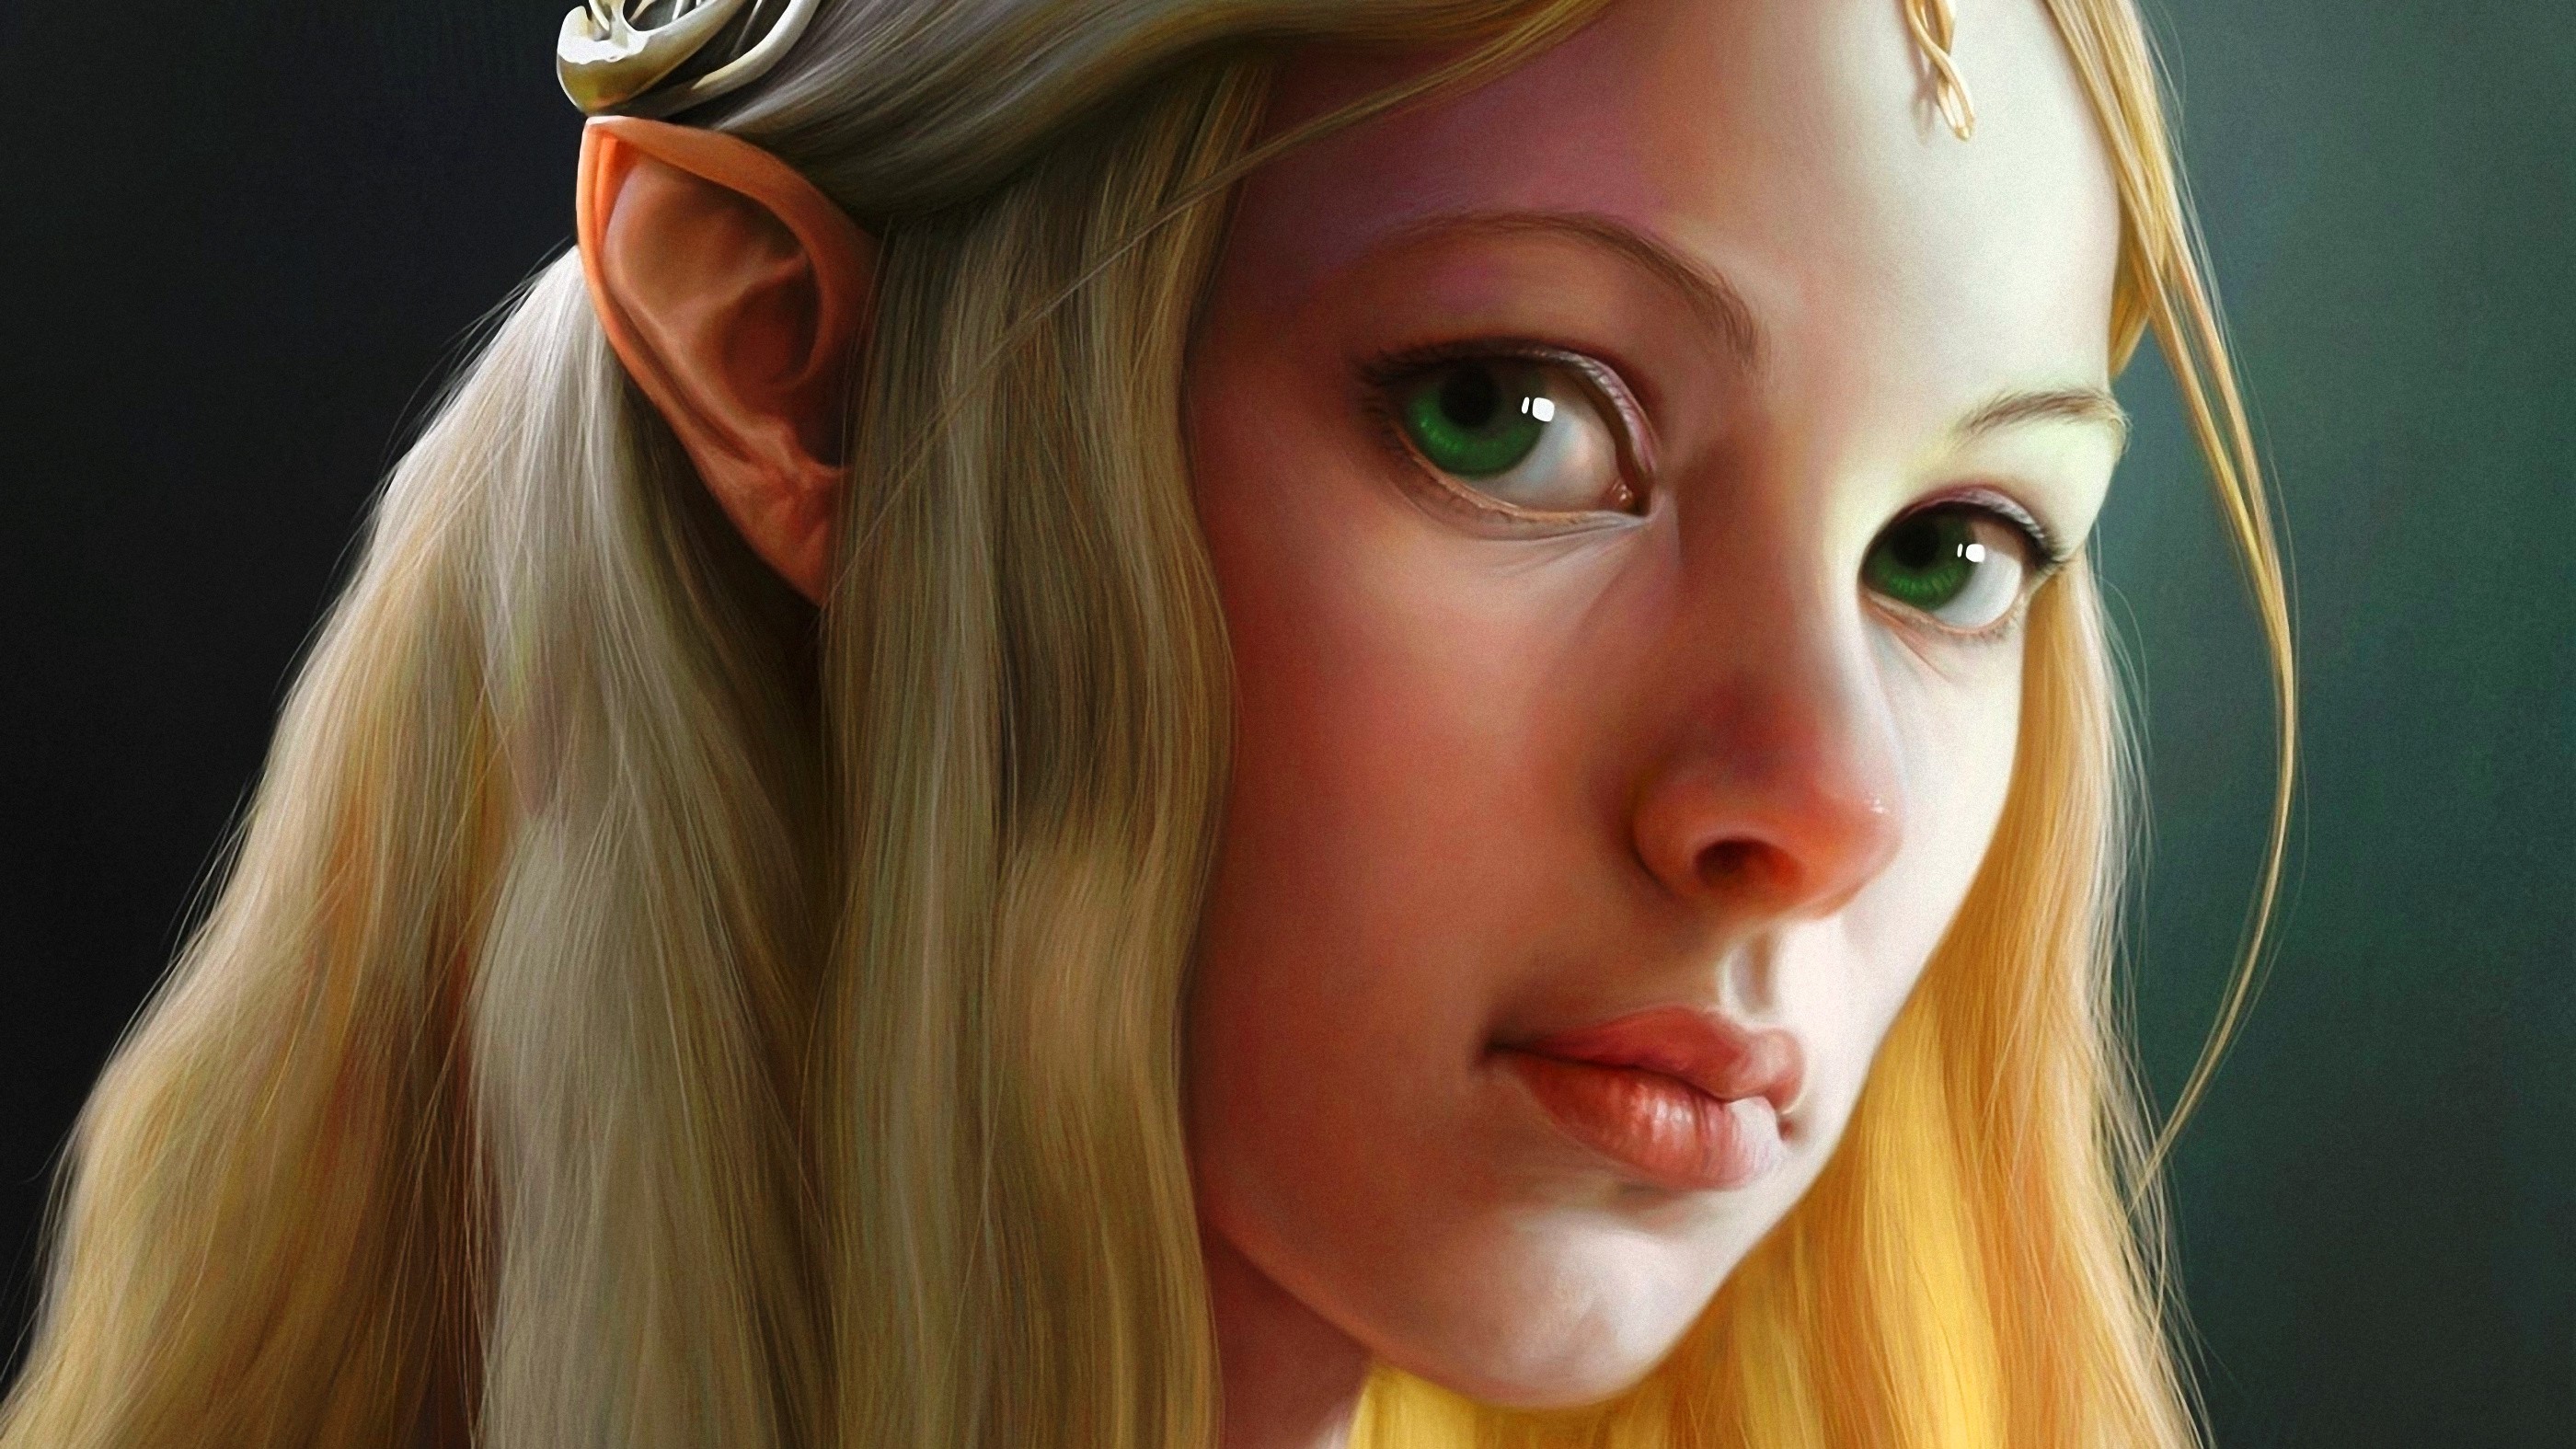 General 2800x1575 fantasy art fantasy girl face green eyes blonde artwork pointy ears closeup looking at viewer women long hair